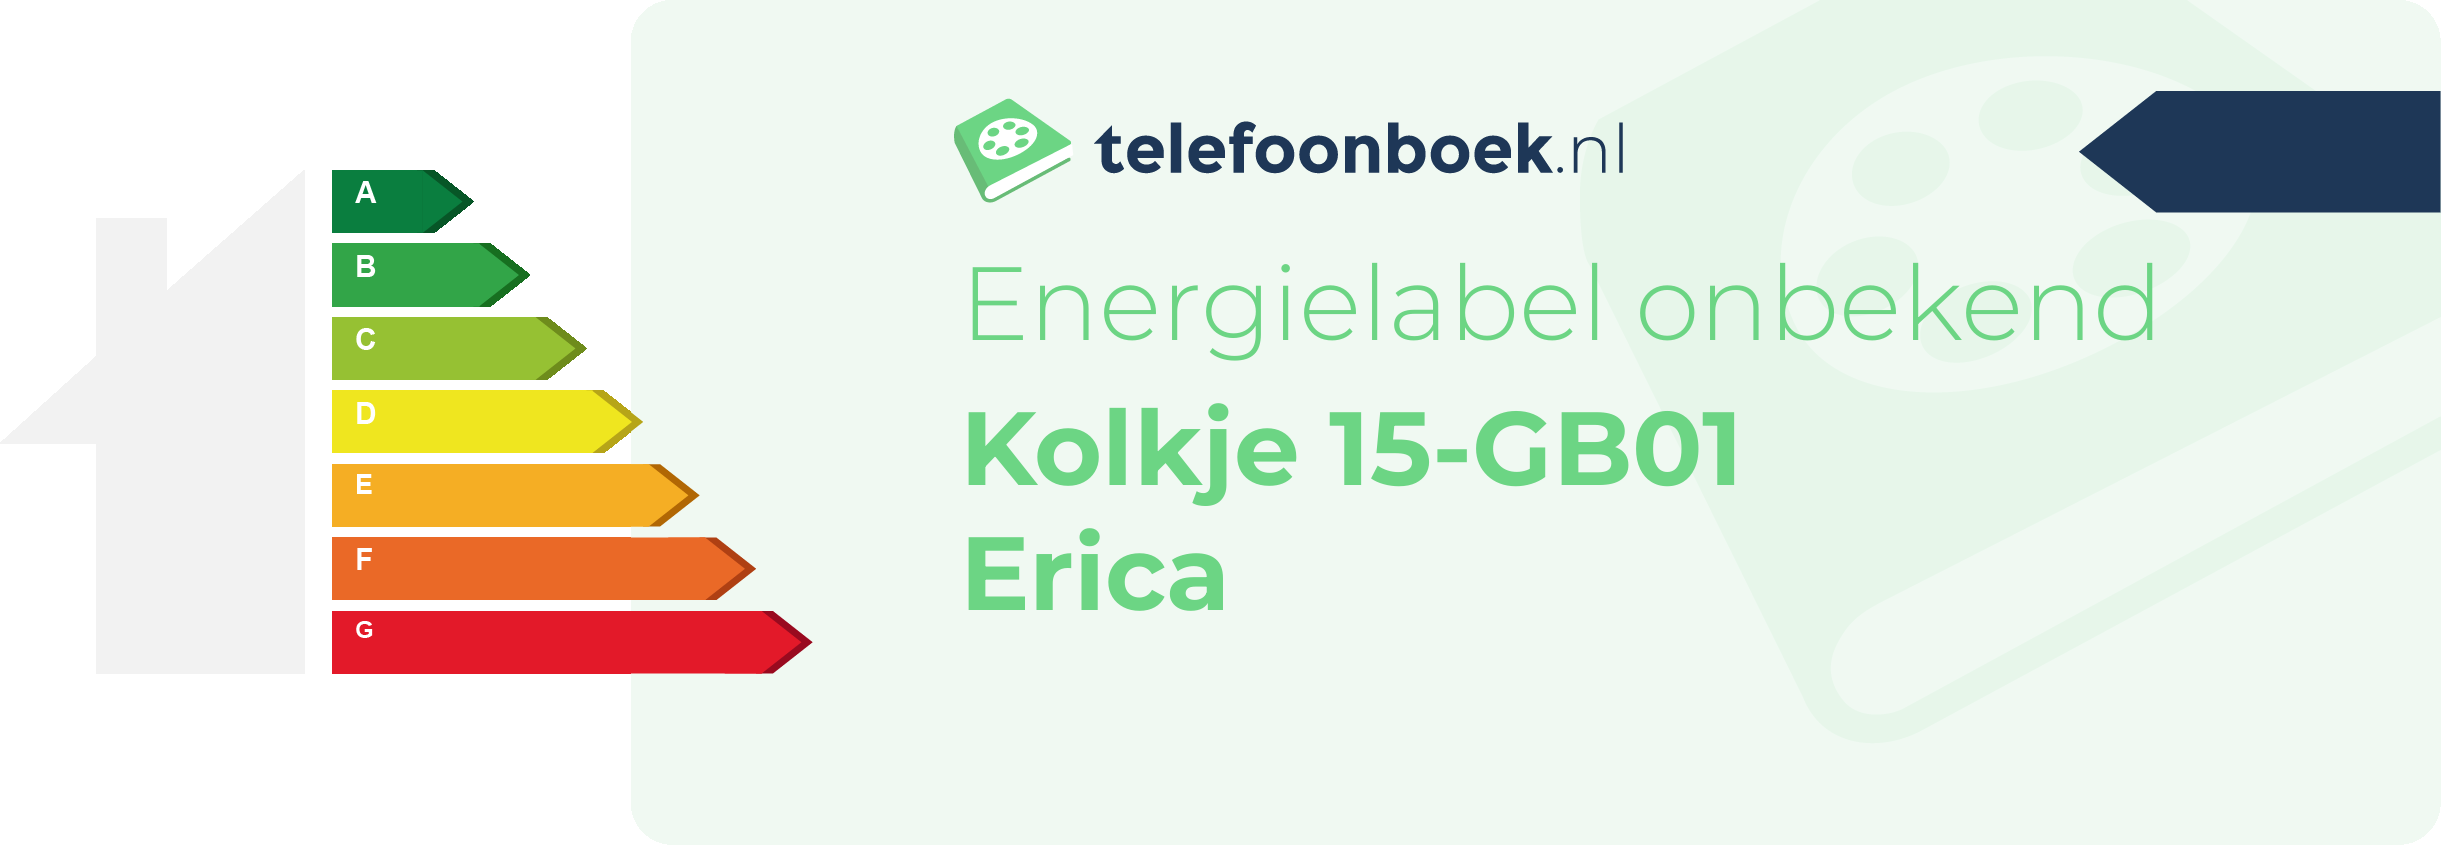 Energielabel Kolkje 15-GB01 Erica